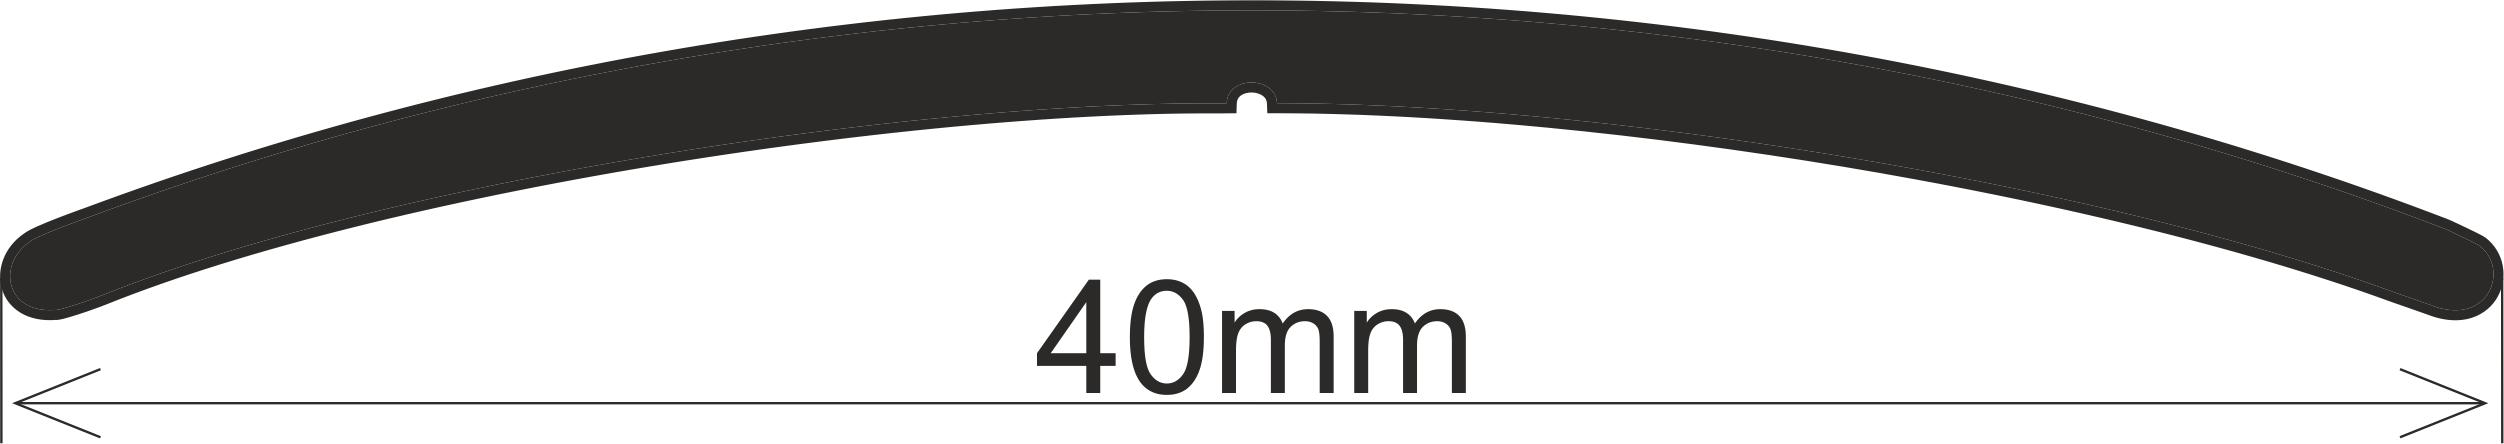 Bohemia profil pechodov lita samolepc 40mm pvc flie BL 2,7m 